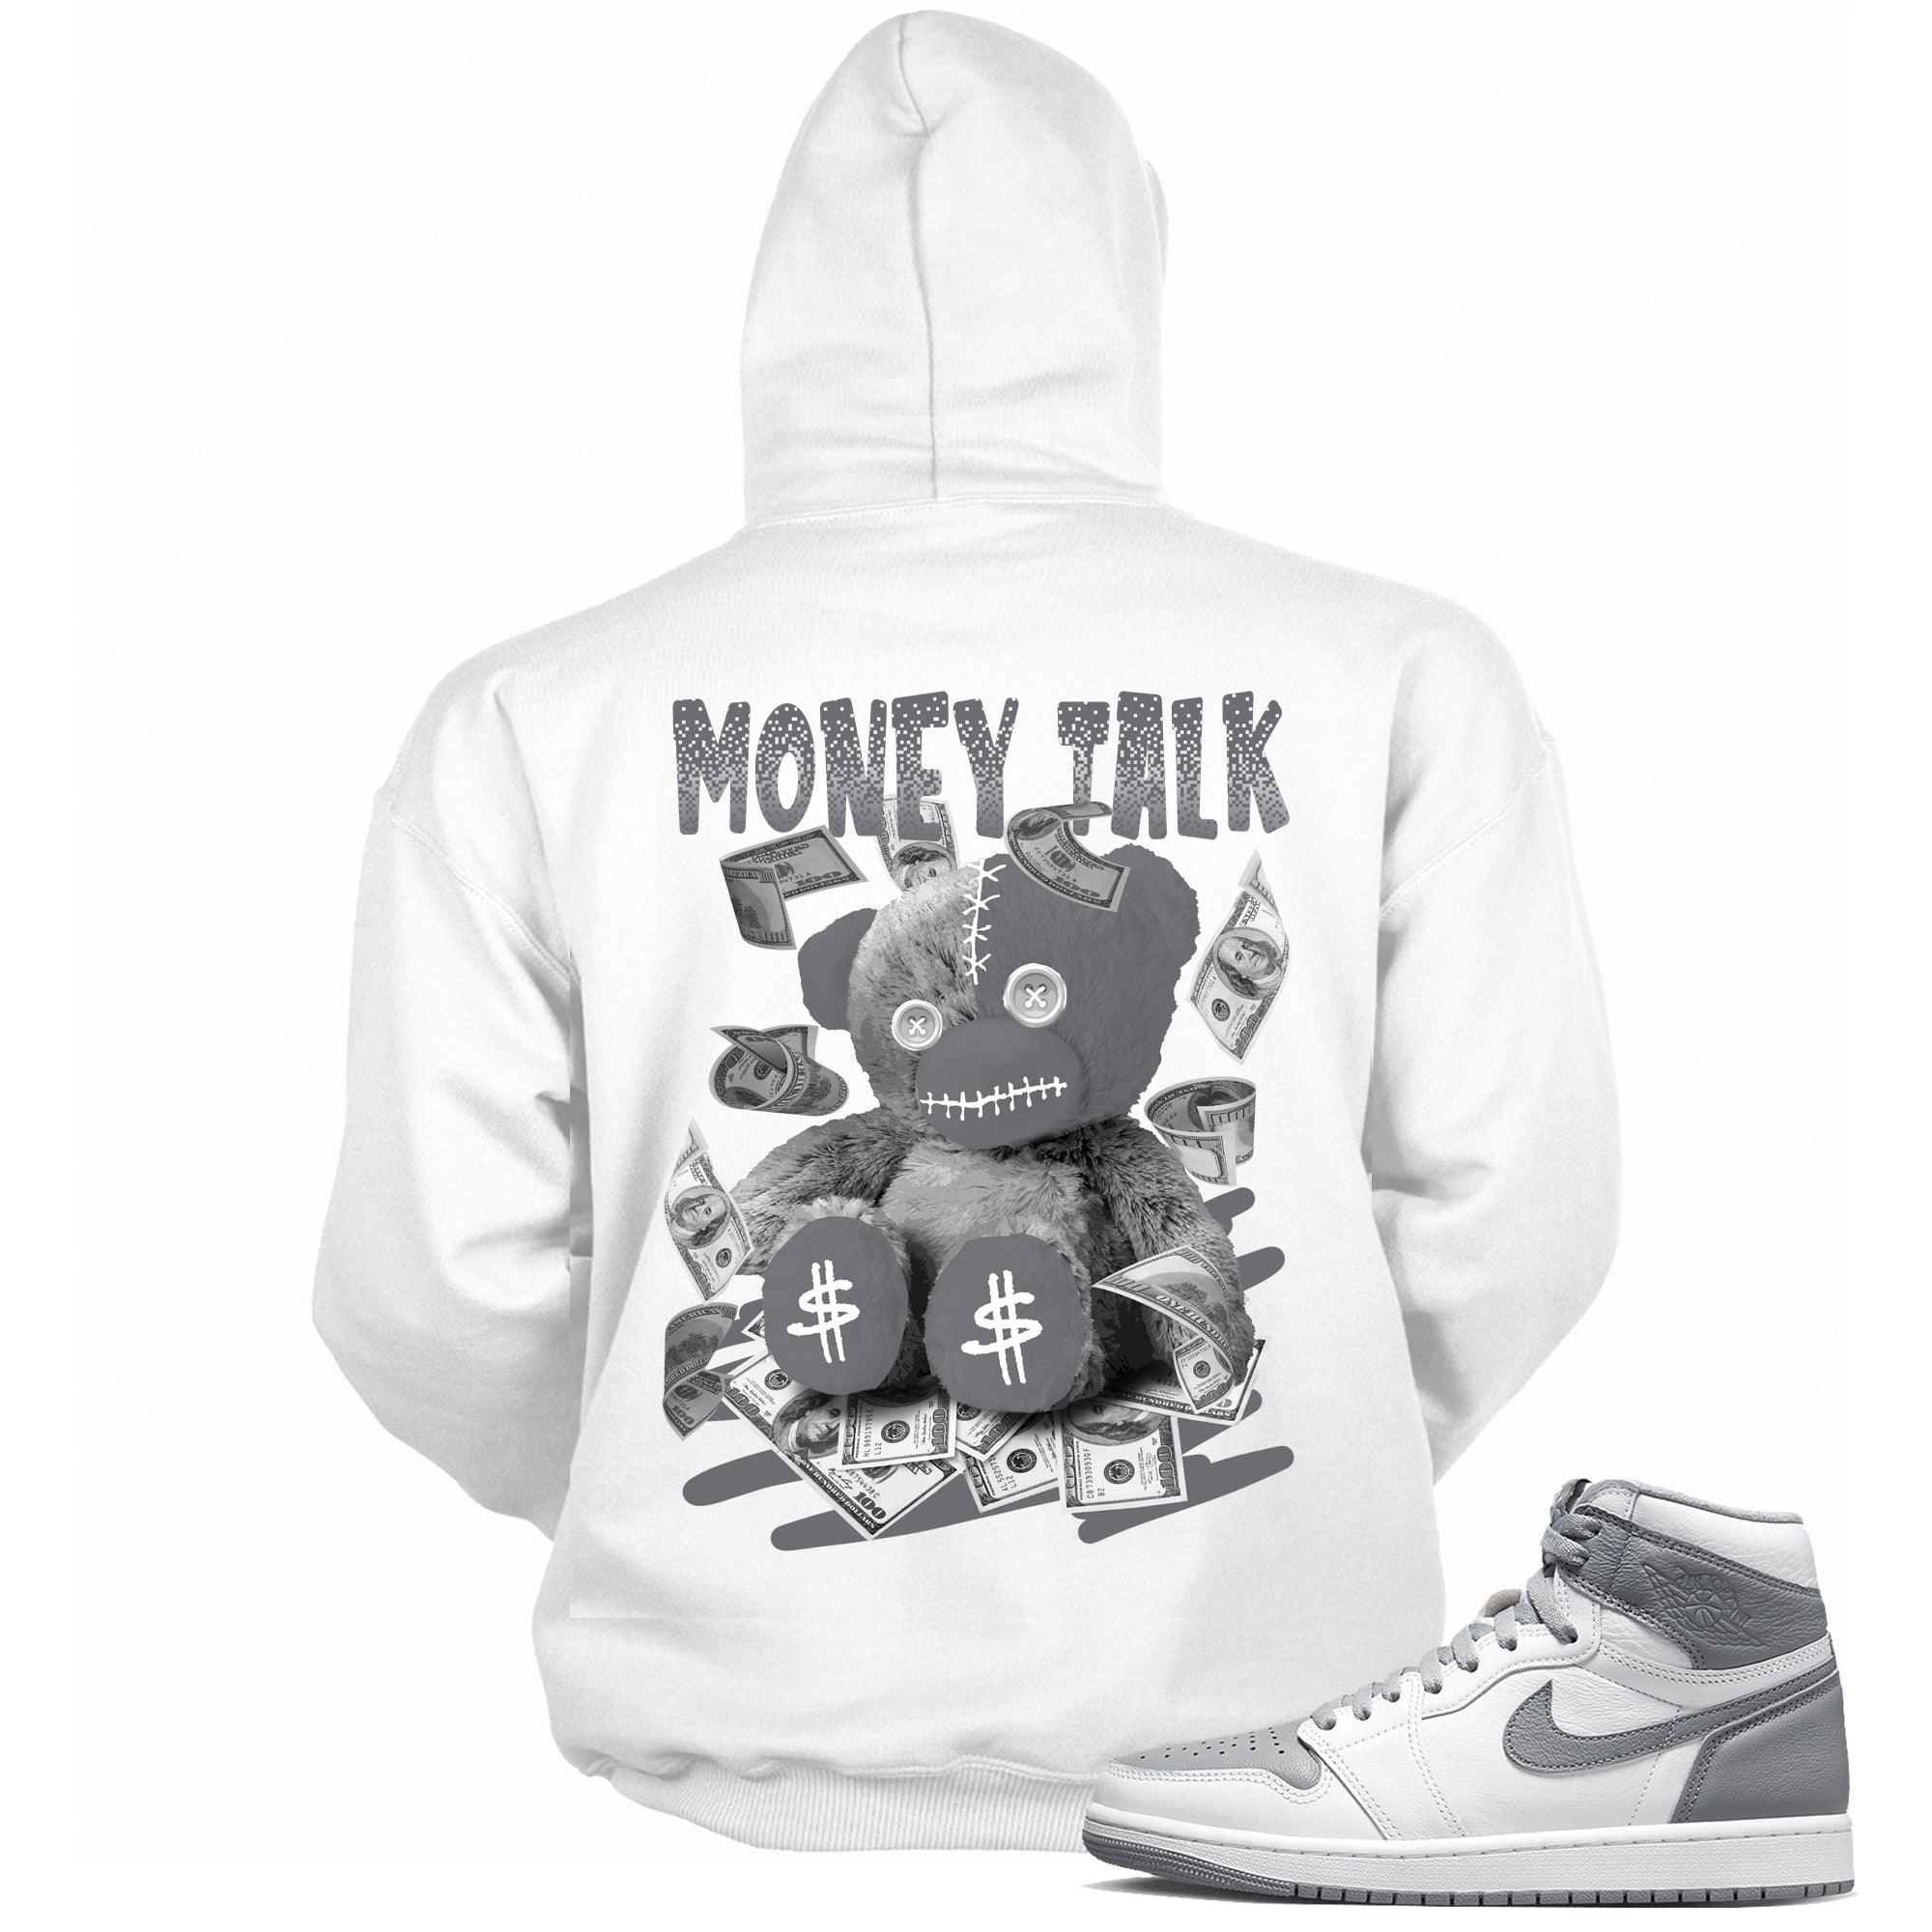 Money Talk Bear Hoodie for Jordan 1s photo